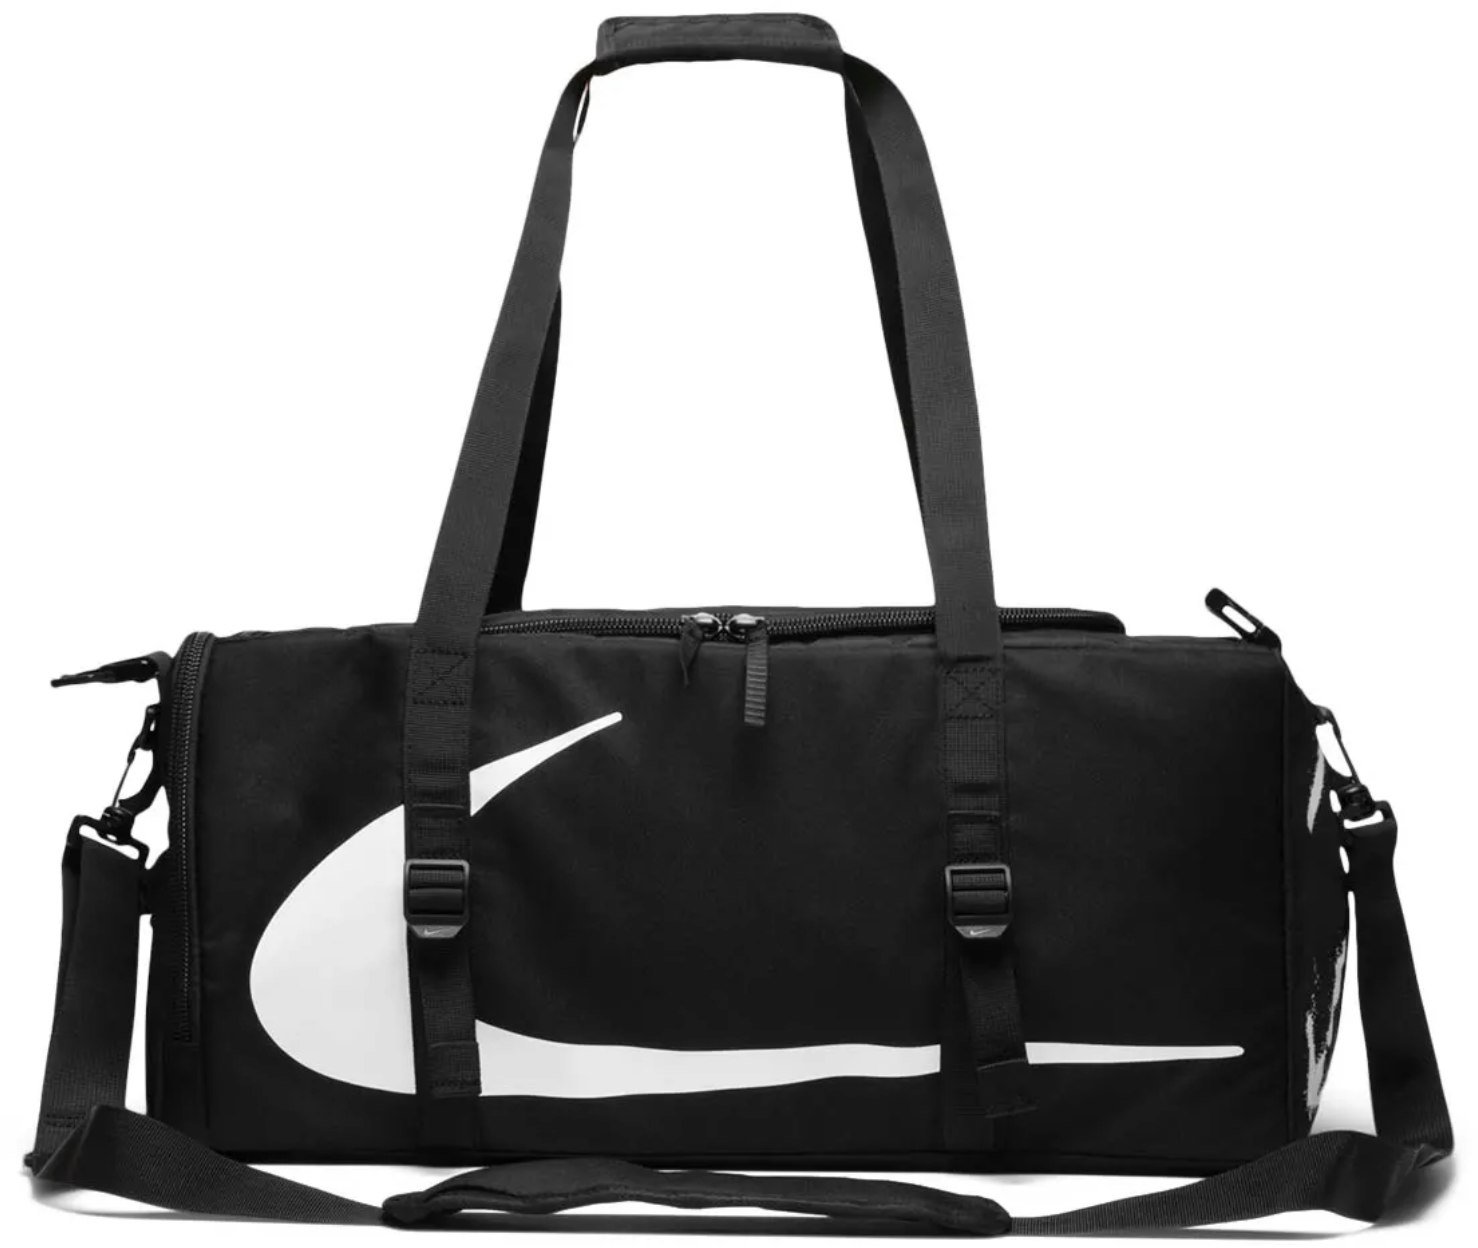 Backpack Nike x Off-White Black in Plastic - 31654065